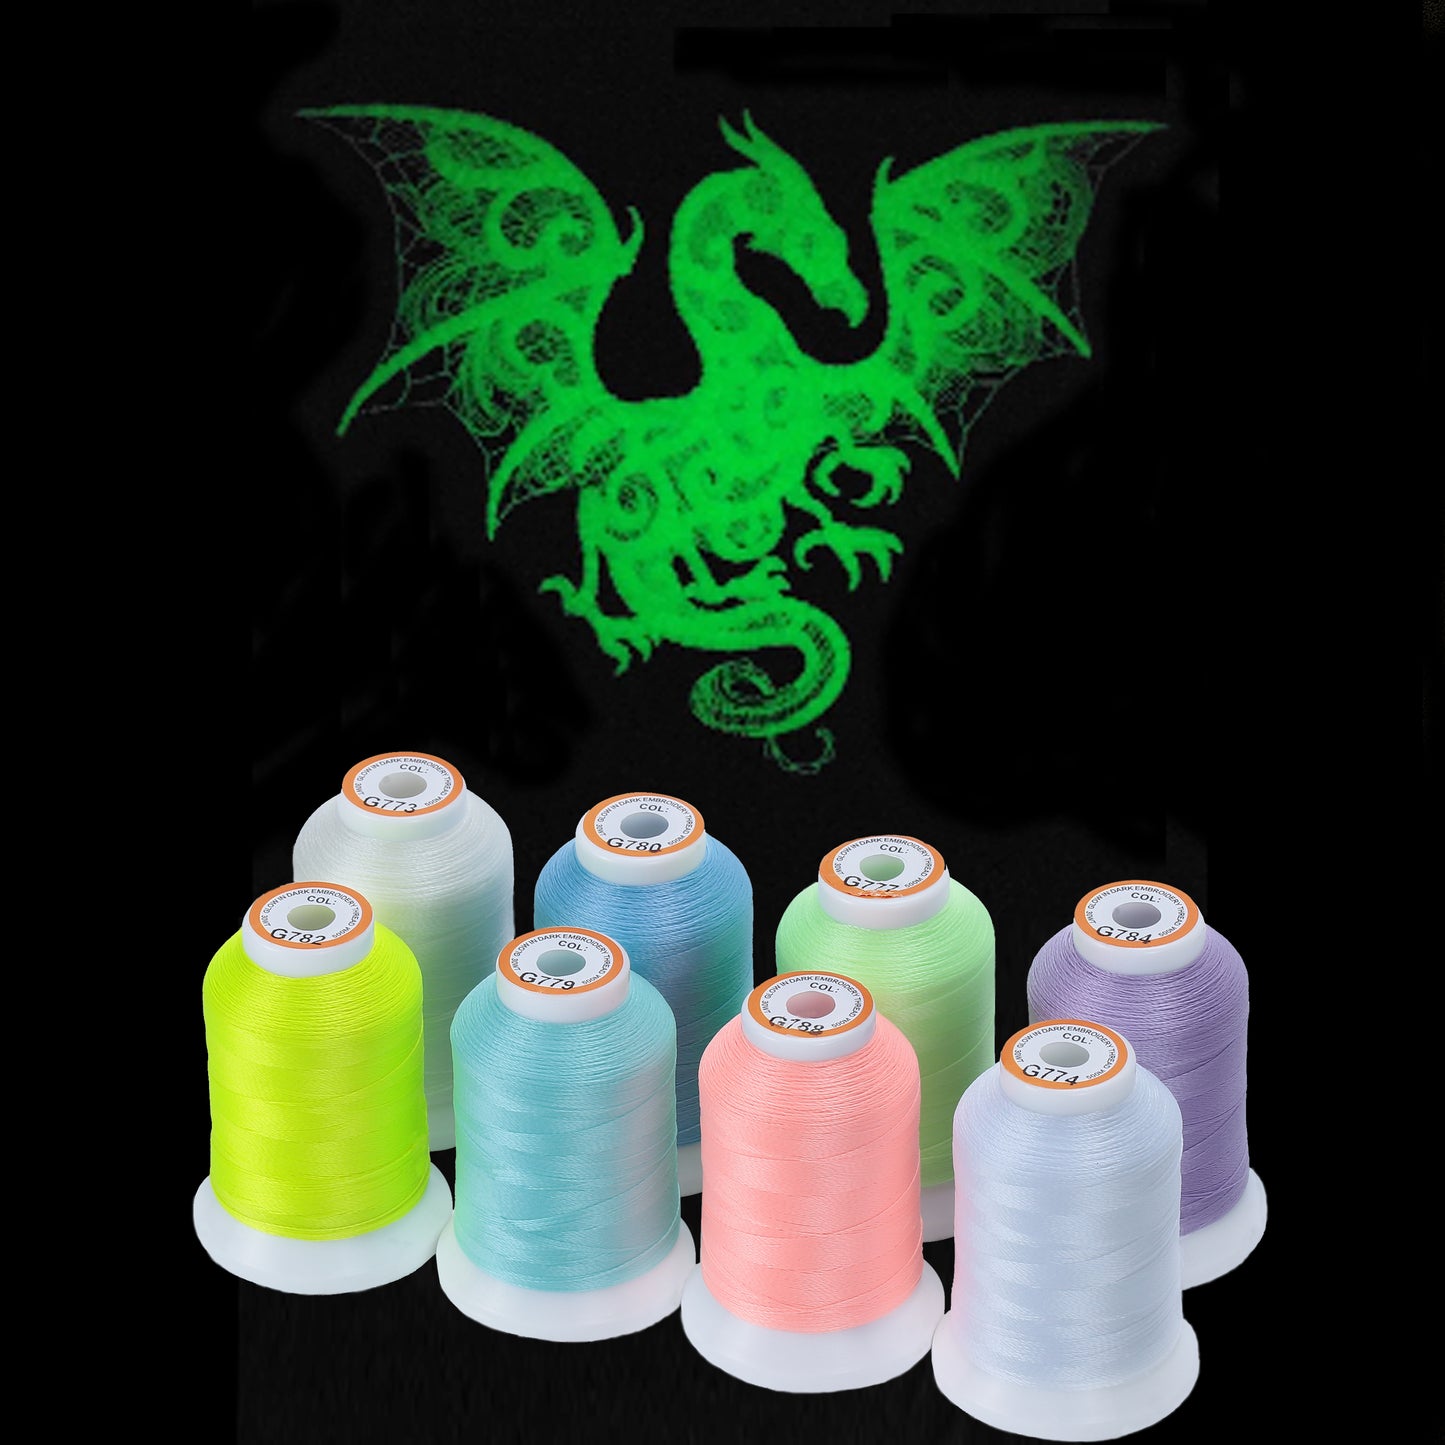 New brothread 8 Spools UV Color Changing Embroidery Machine Thread Kit 30WT  500M(550Y)